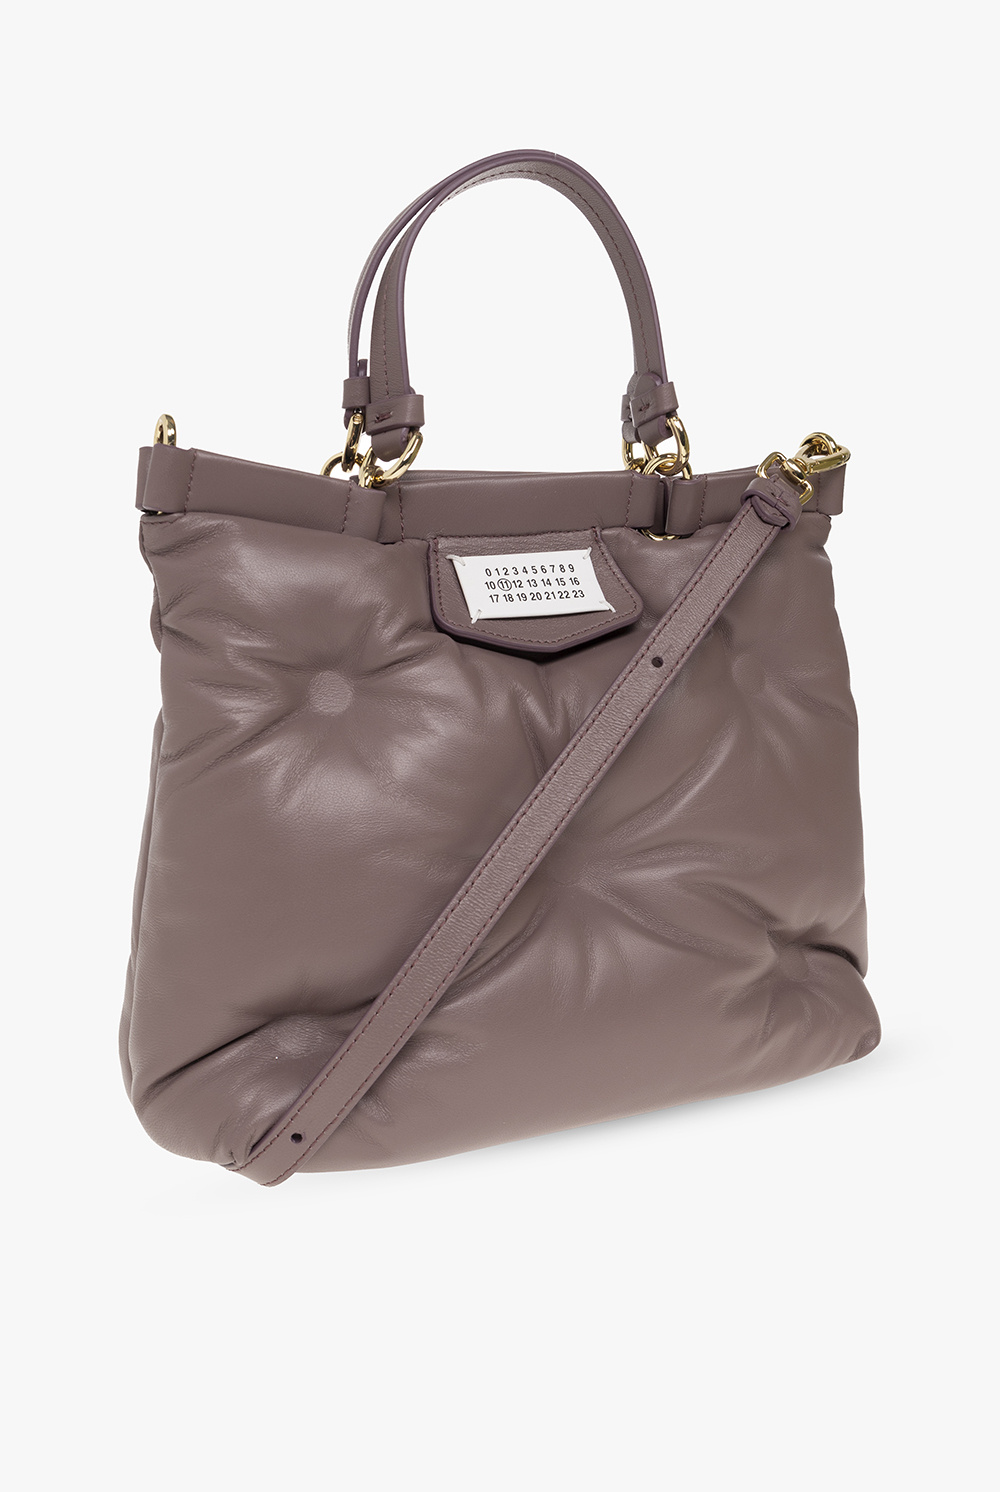 Maison Margiela ‘Glam Slam Small’ shoulder van bag